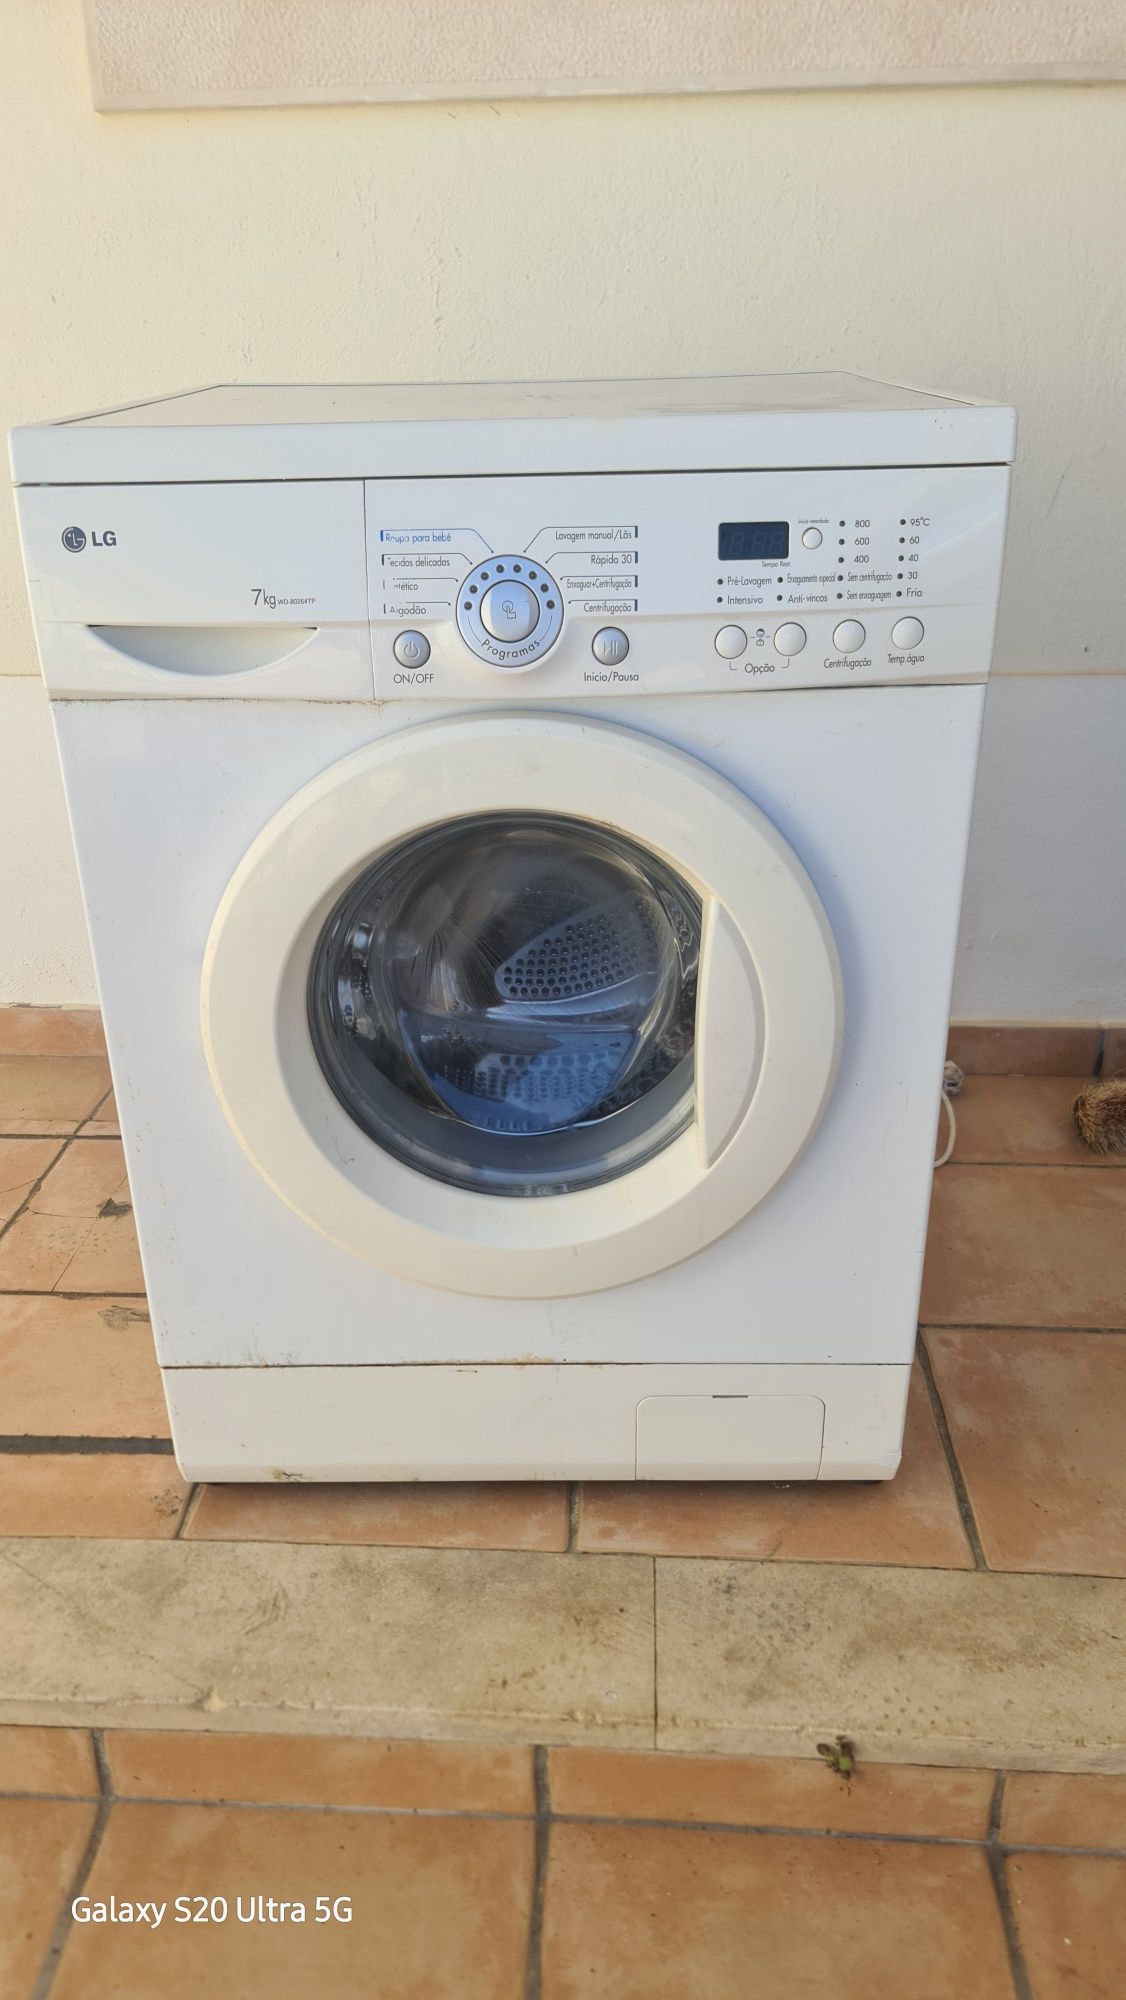 Máquina lavar roupa a funcionar normalmente.